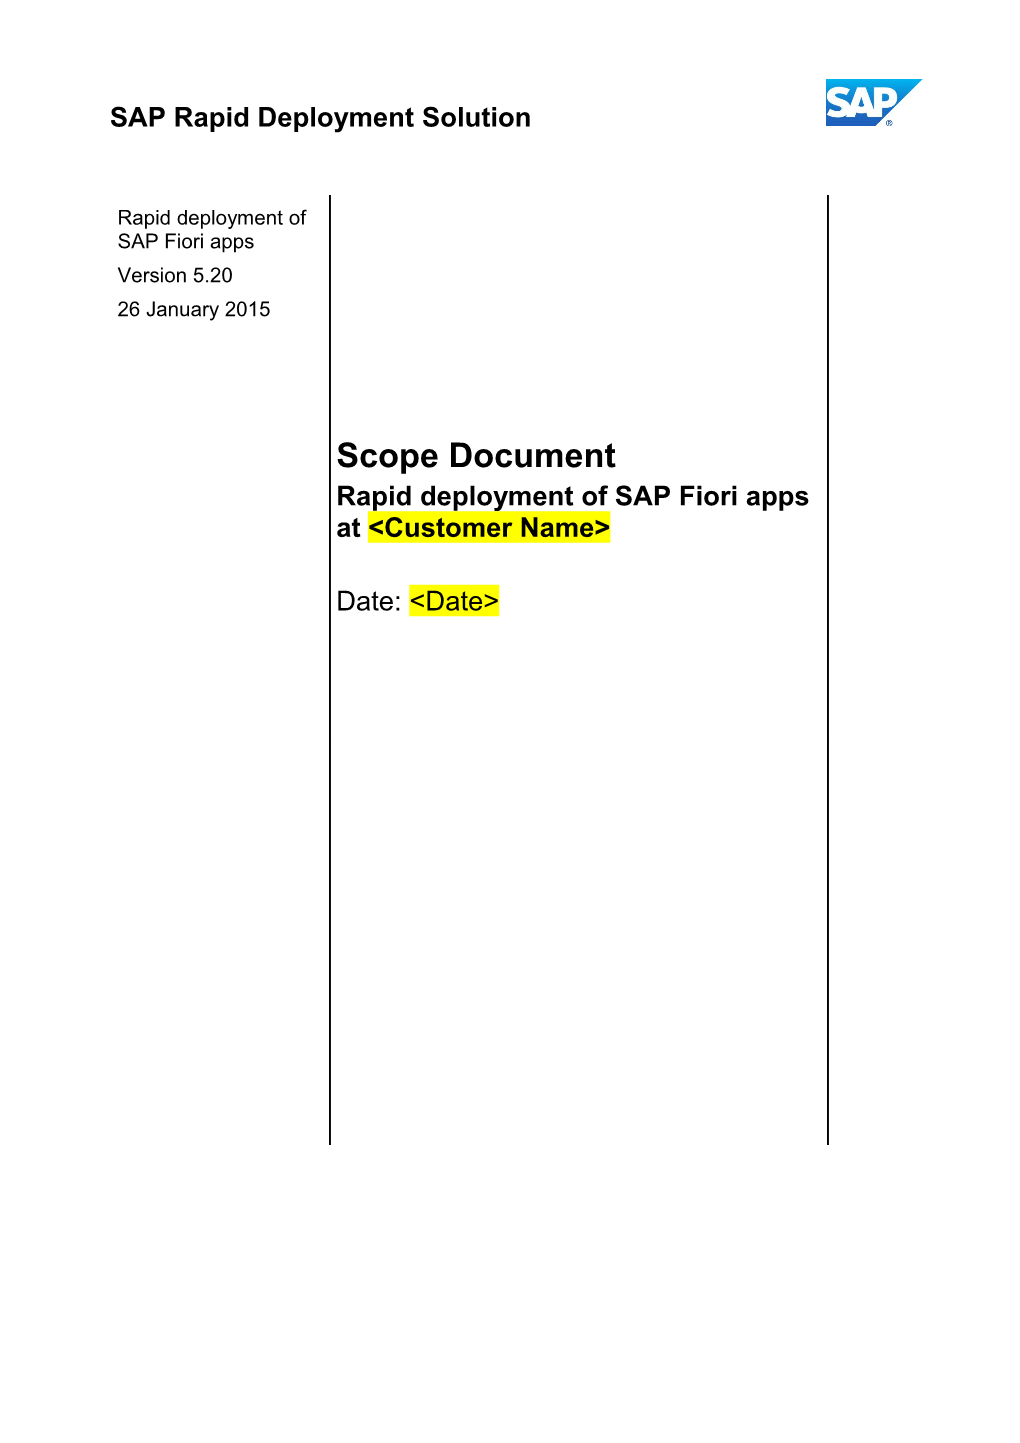 RDS Scope Document